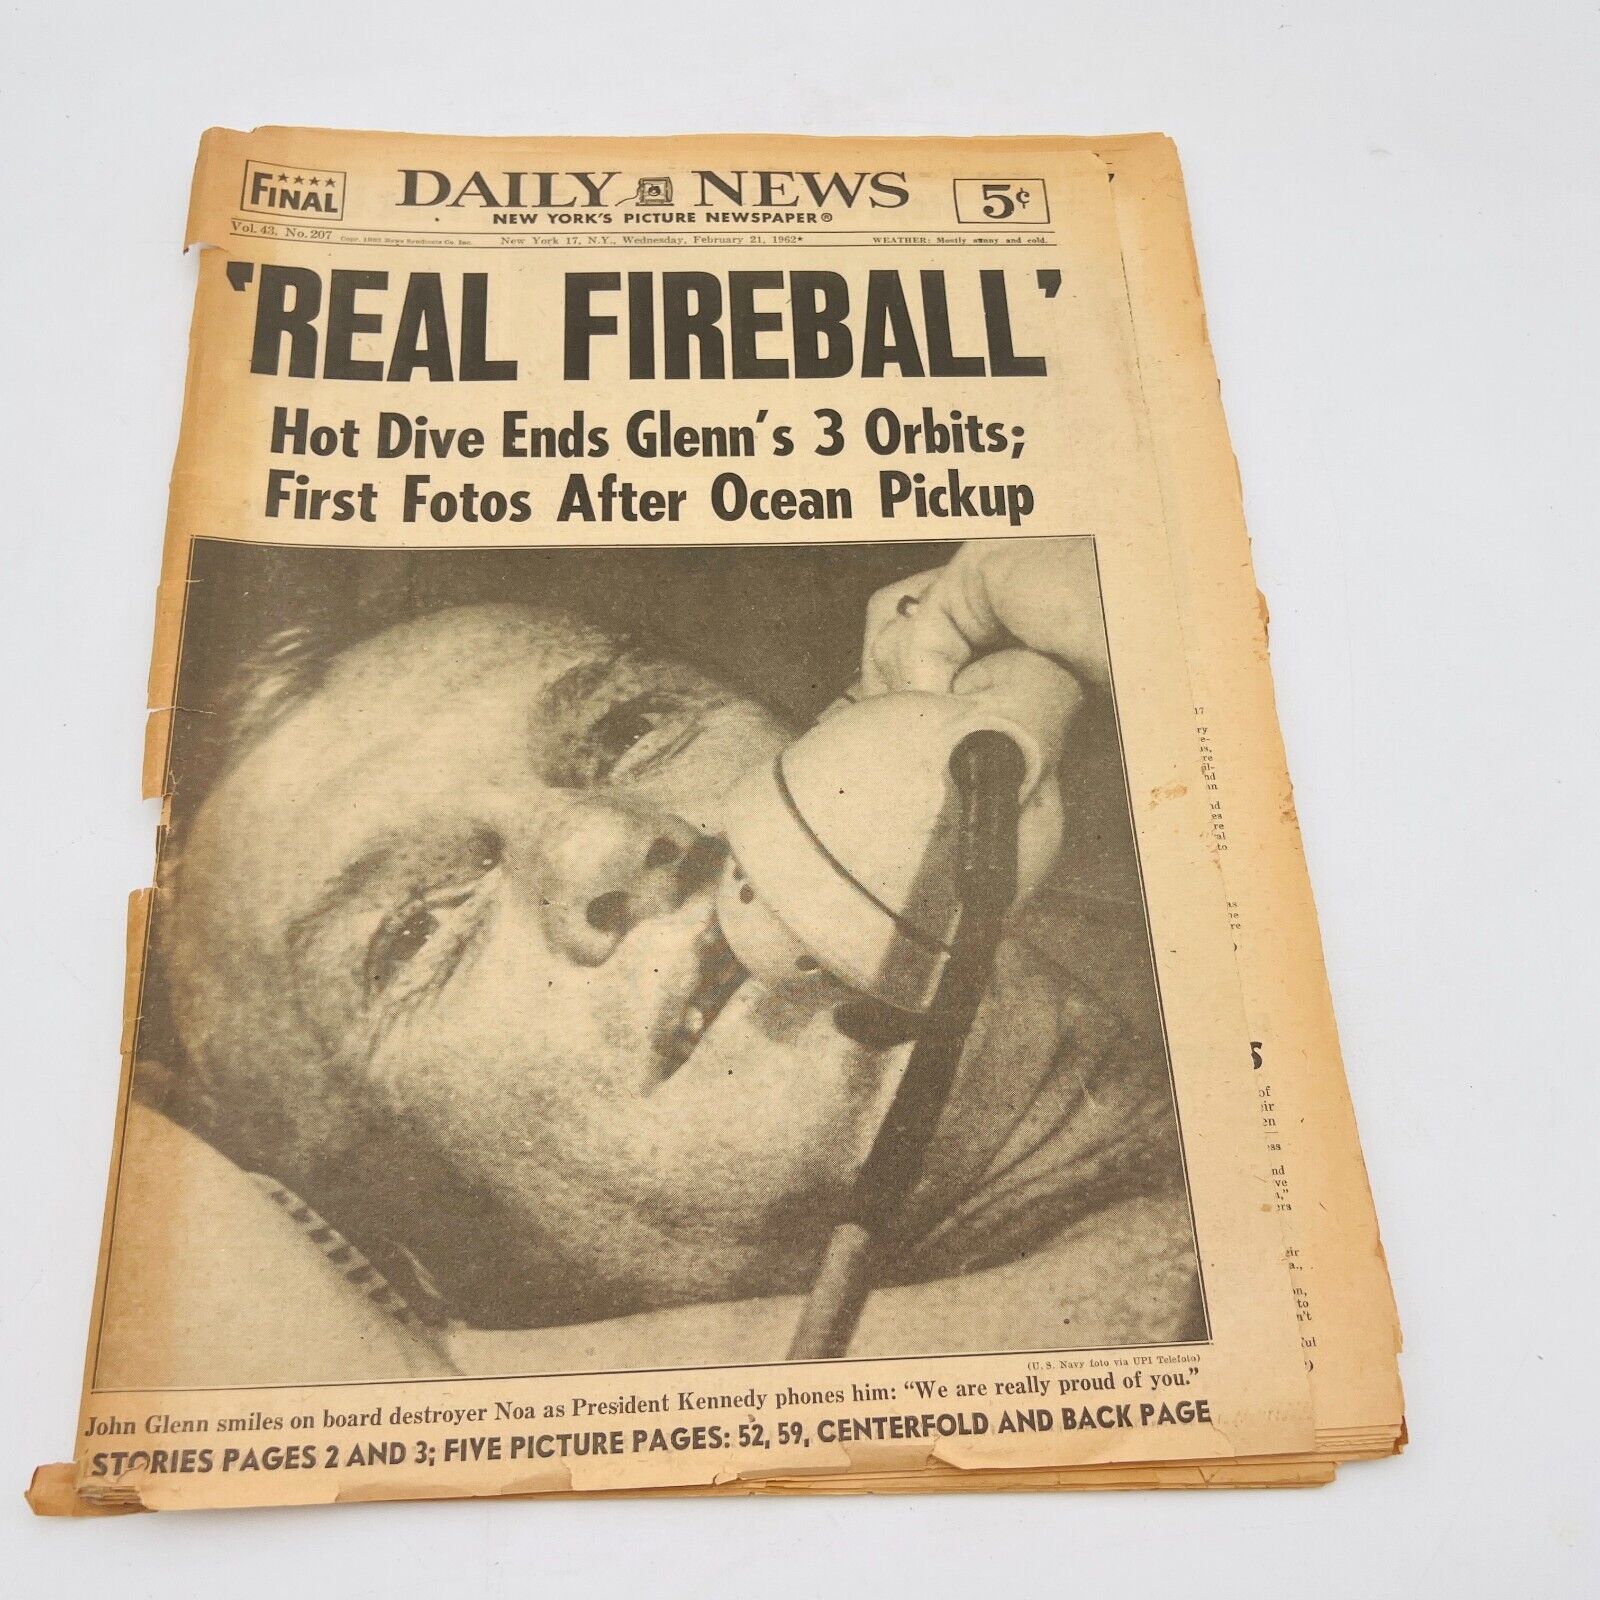 New York Daily News newspaper, February 21, 1962